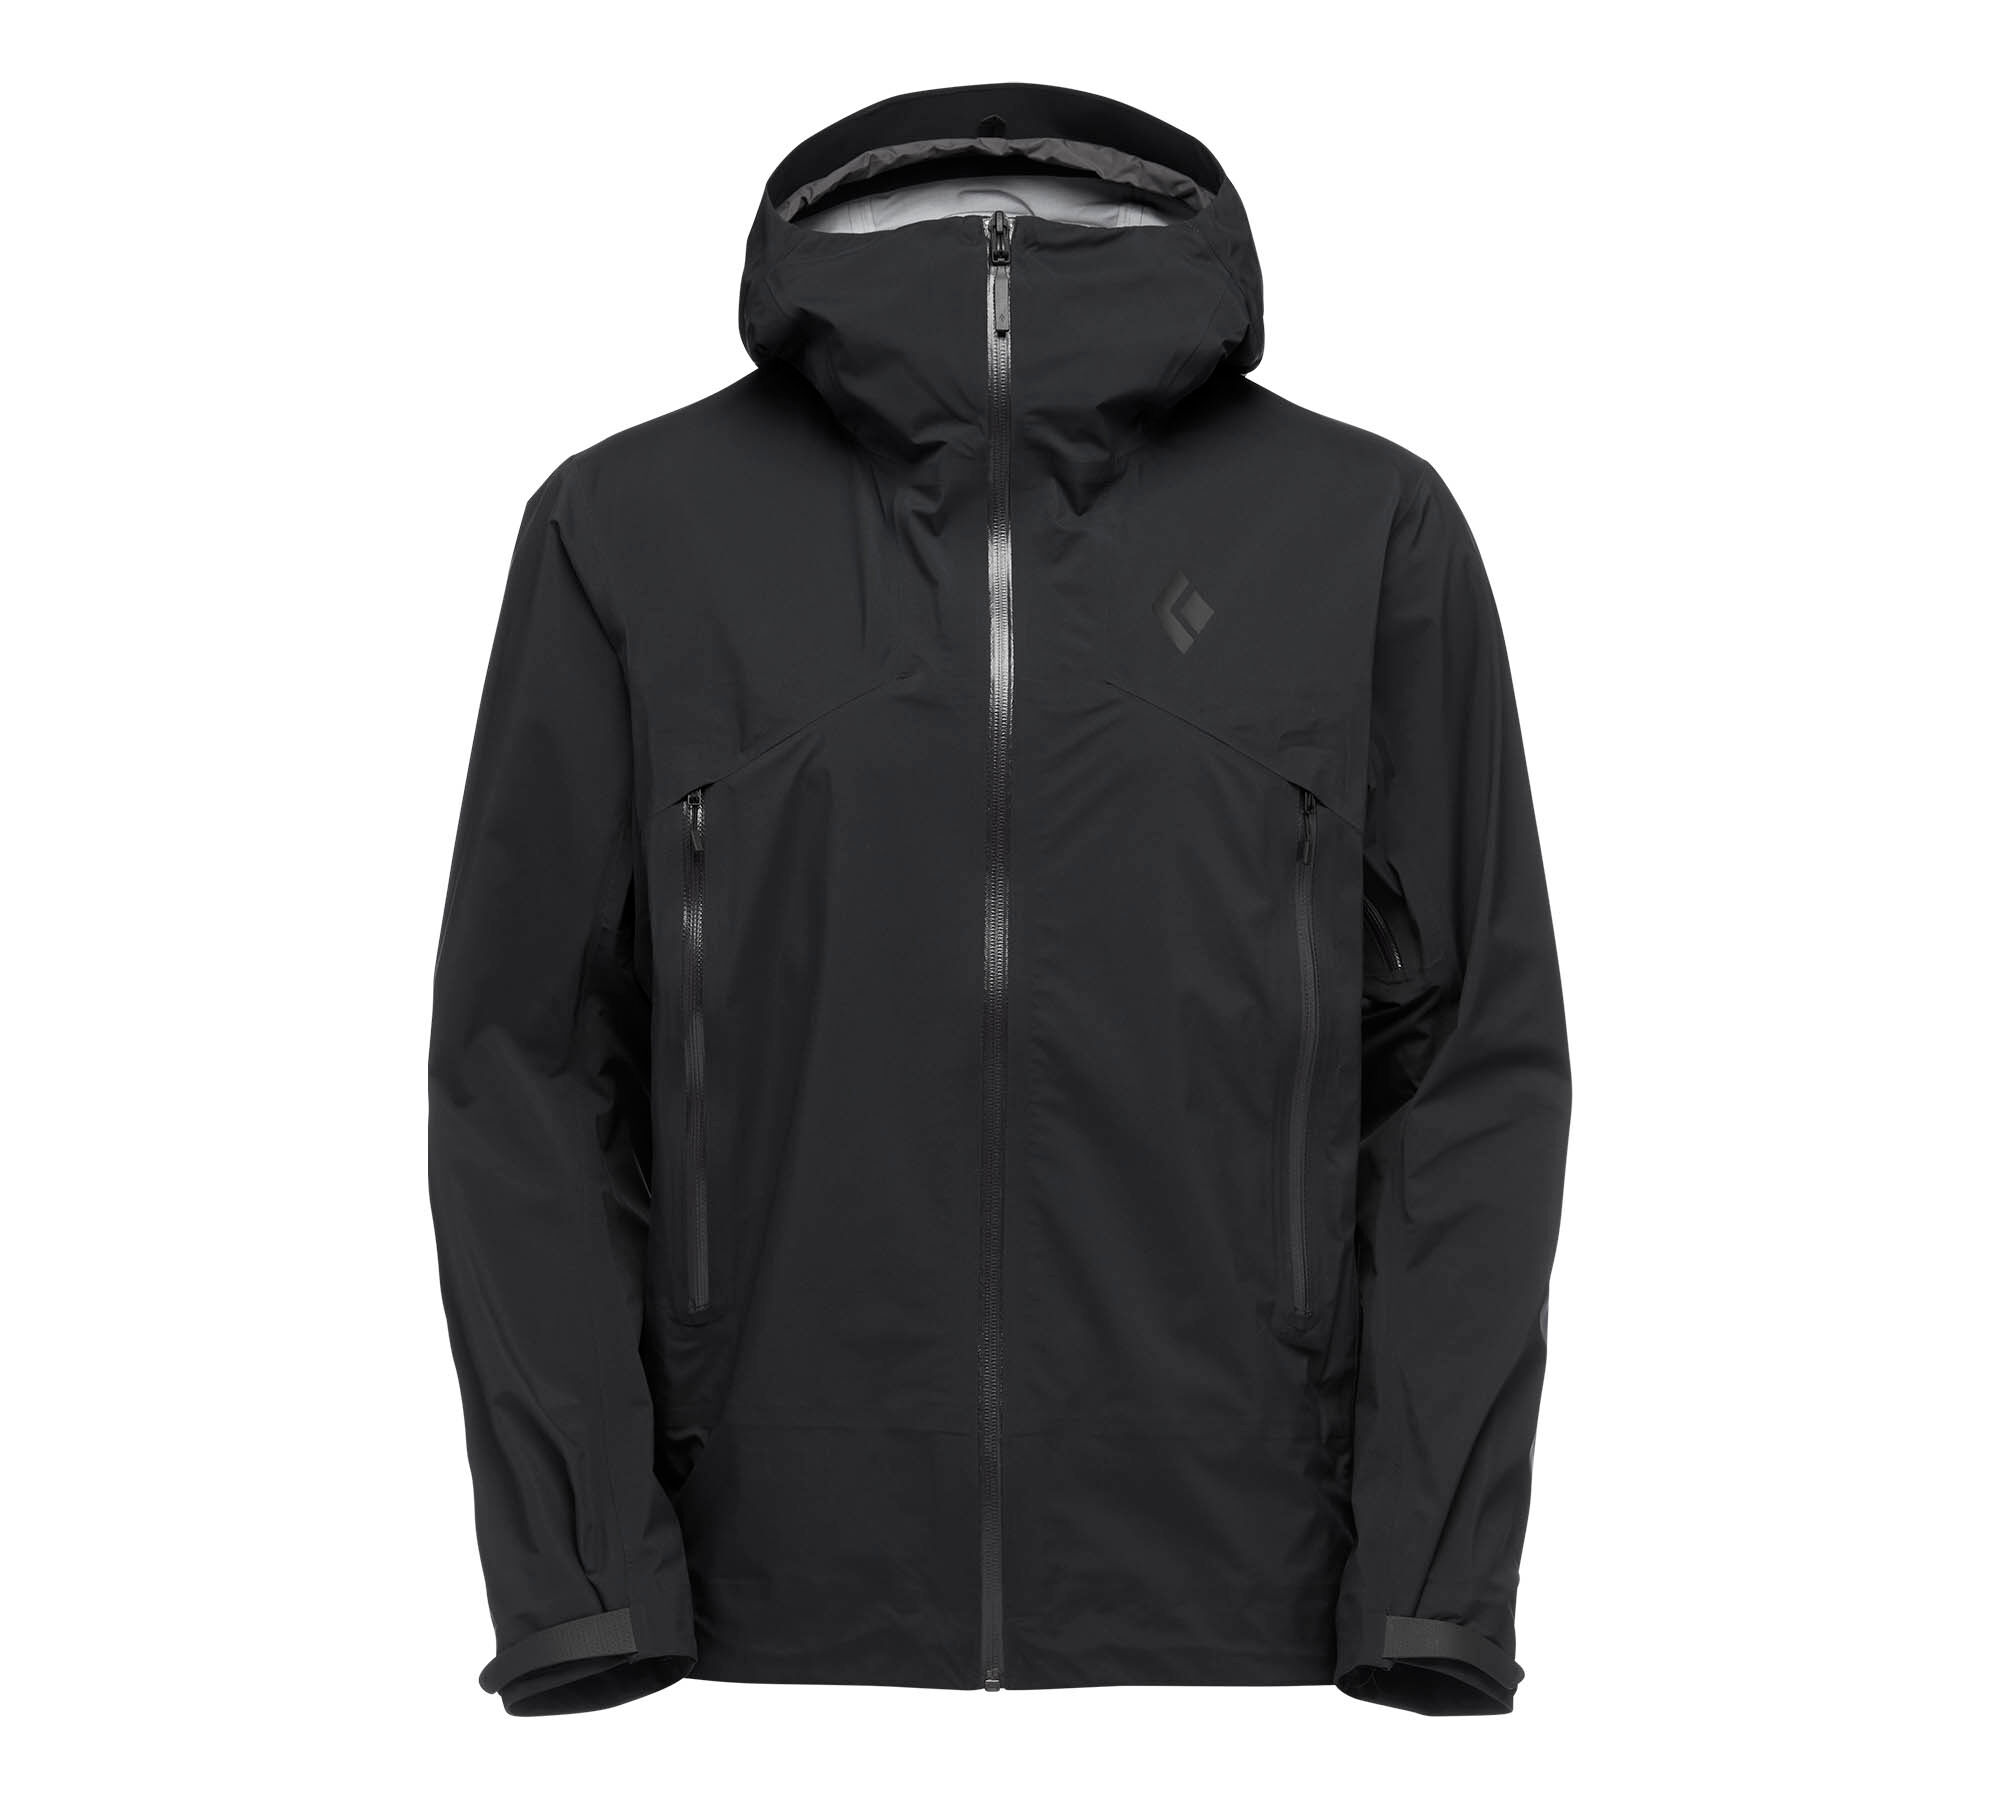 Black Diamond - Helio Active Shell - Ski jacket - Men's